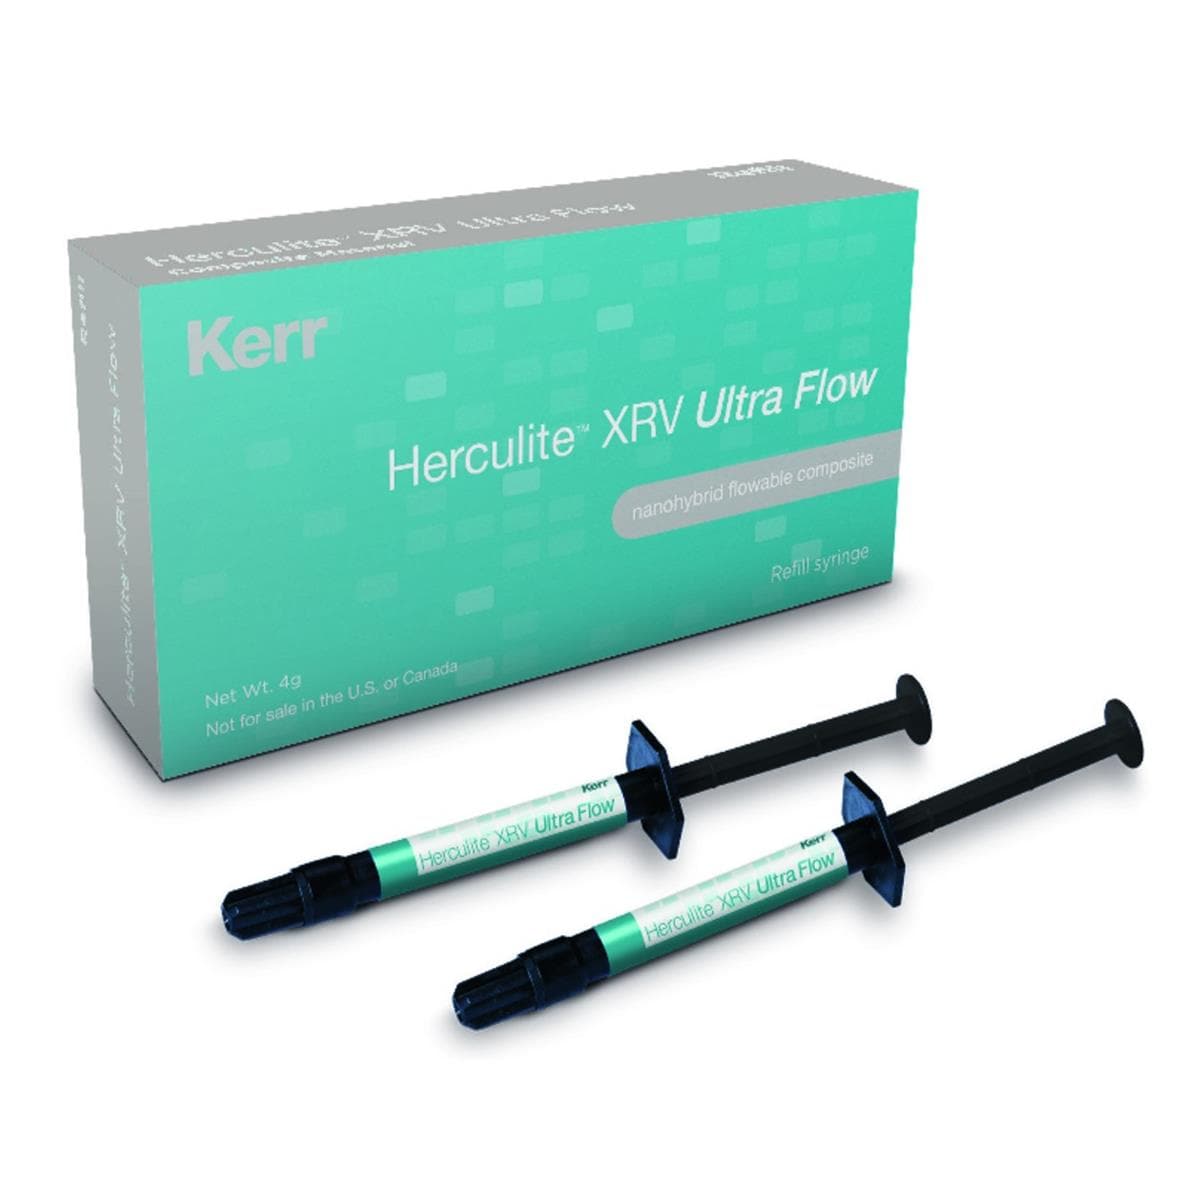 Herculite XRV Ultra Flow KERR - B1 - Seringue de 2g - Bote de 2